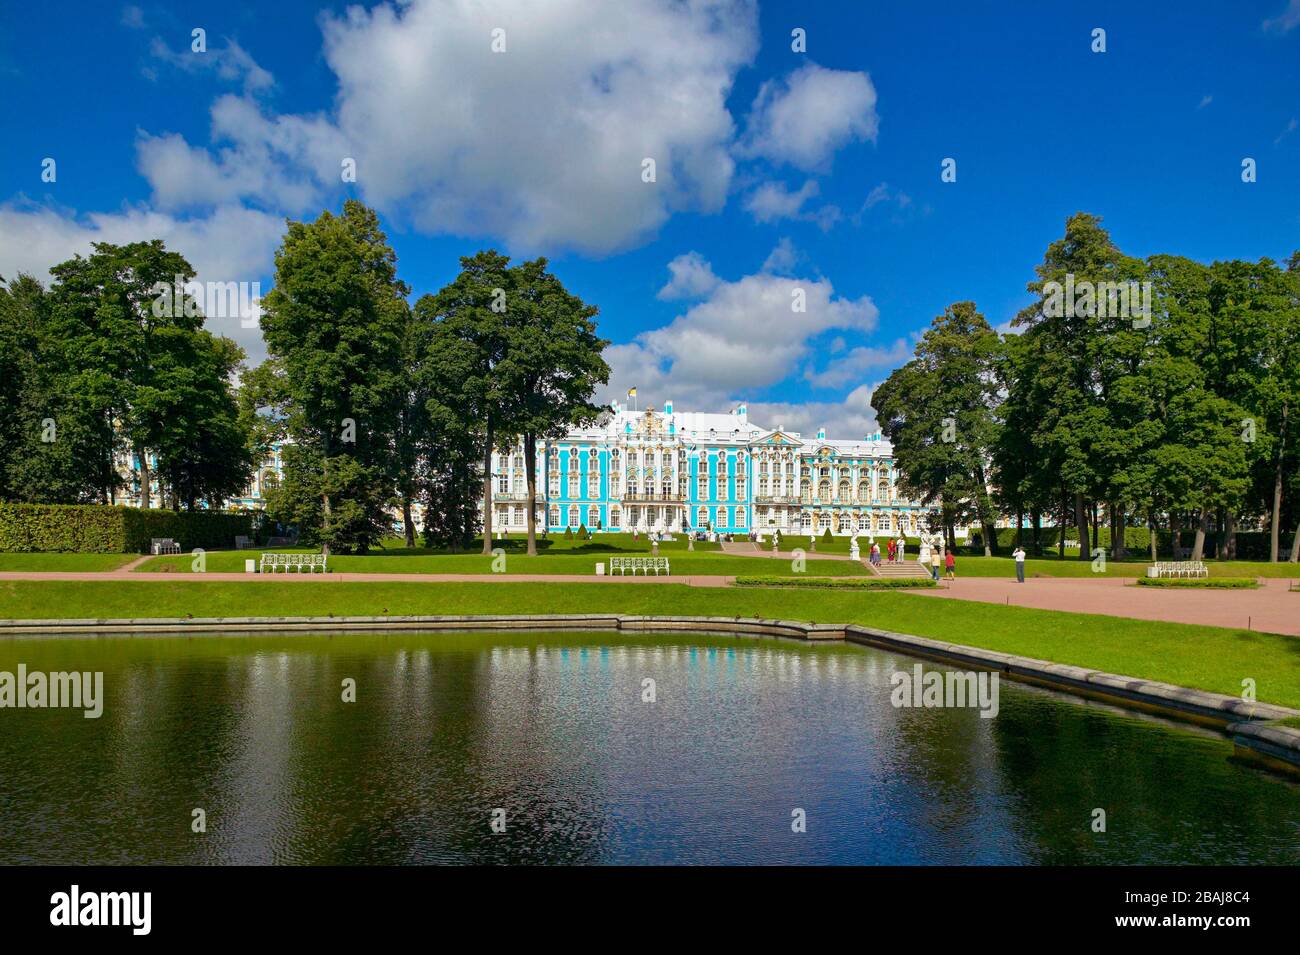 Russland St. Petersburg Puschkin Katharinen-palast Katharinenpark Teich Park Zarskoje Selo Detskoje Zarendorf Architektur Baukunst Barock Spaetbarock Stock Photo